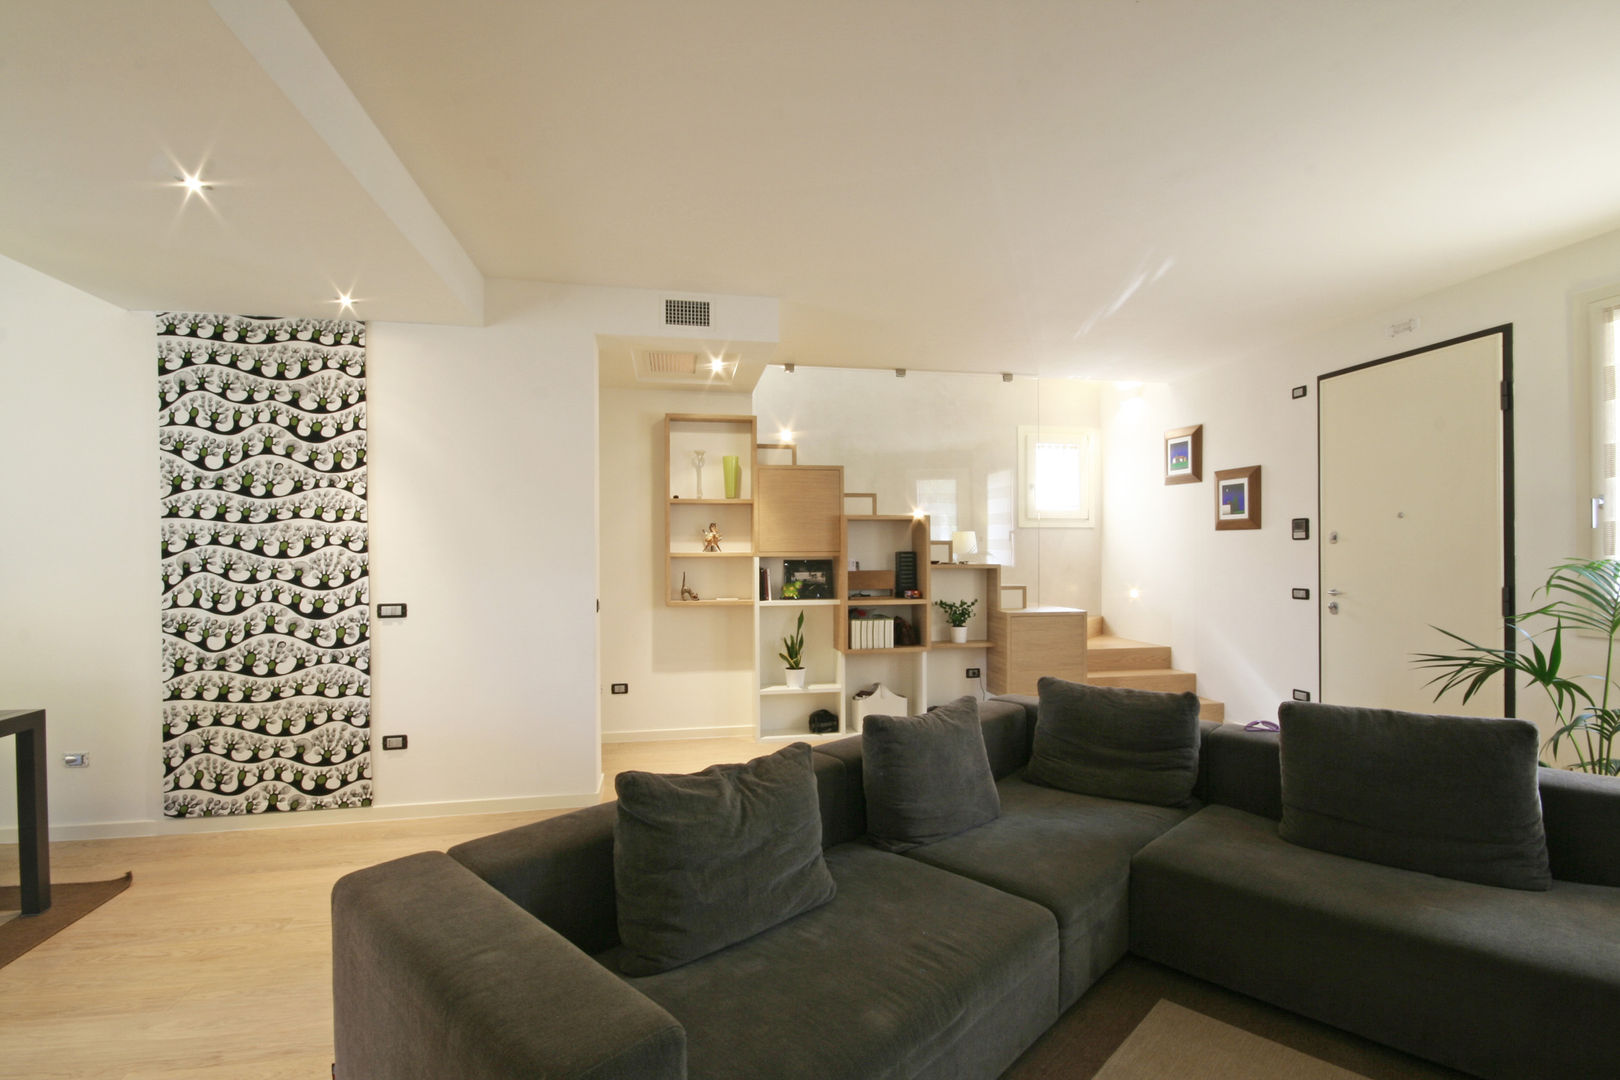 House in Marostica, Diego Gnoato Architect Diego Gnoato Architect Salas modernas Muebles para televisión y equipos